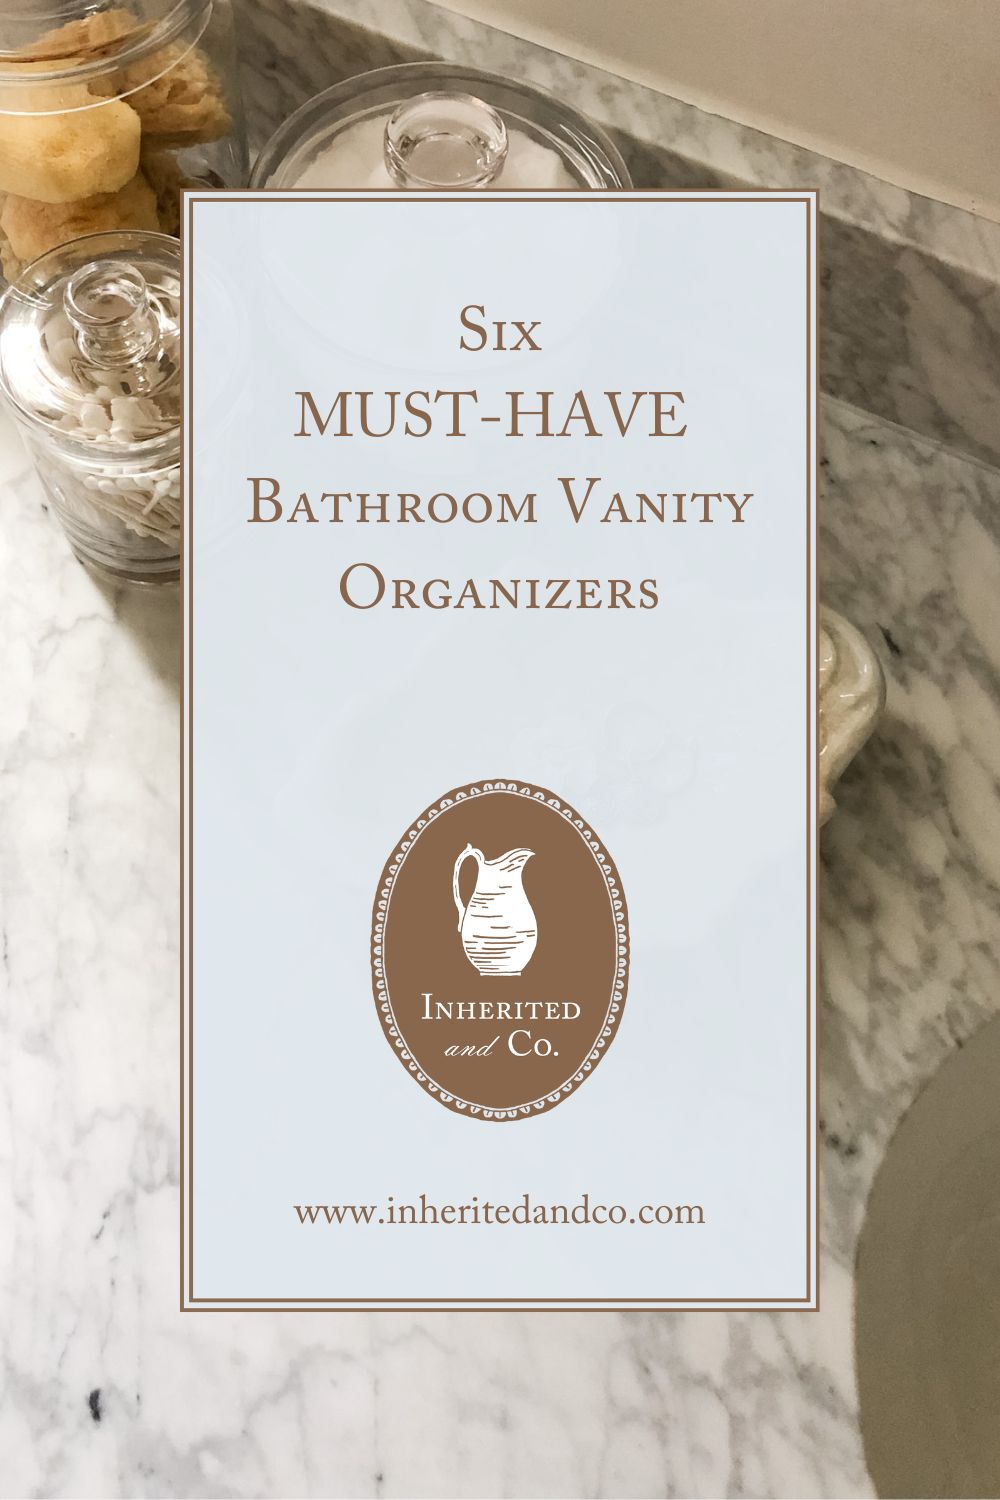 "Six MUST-HAVE Bathroom Vanity Organizers"